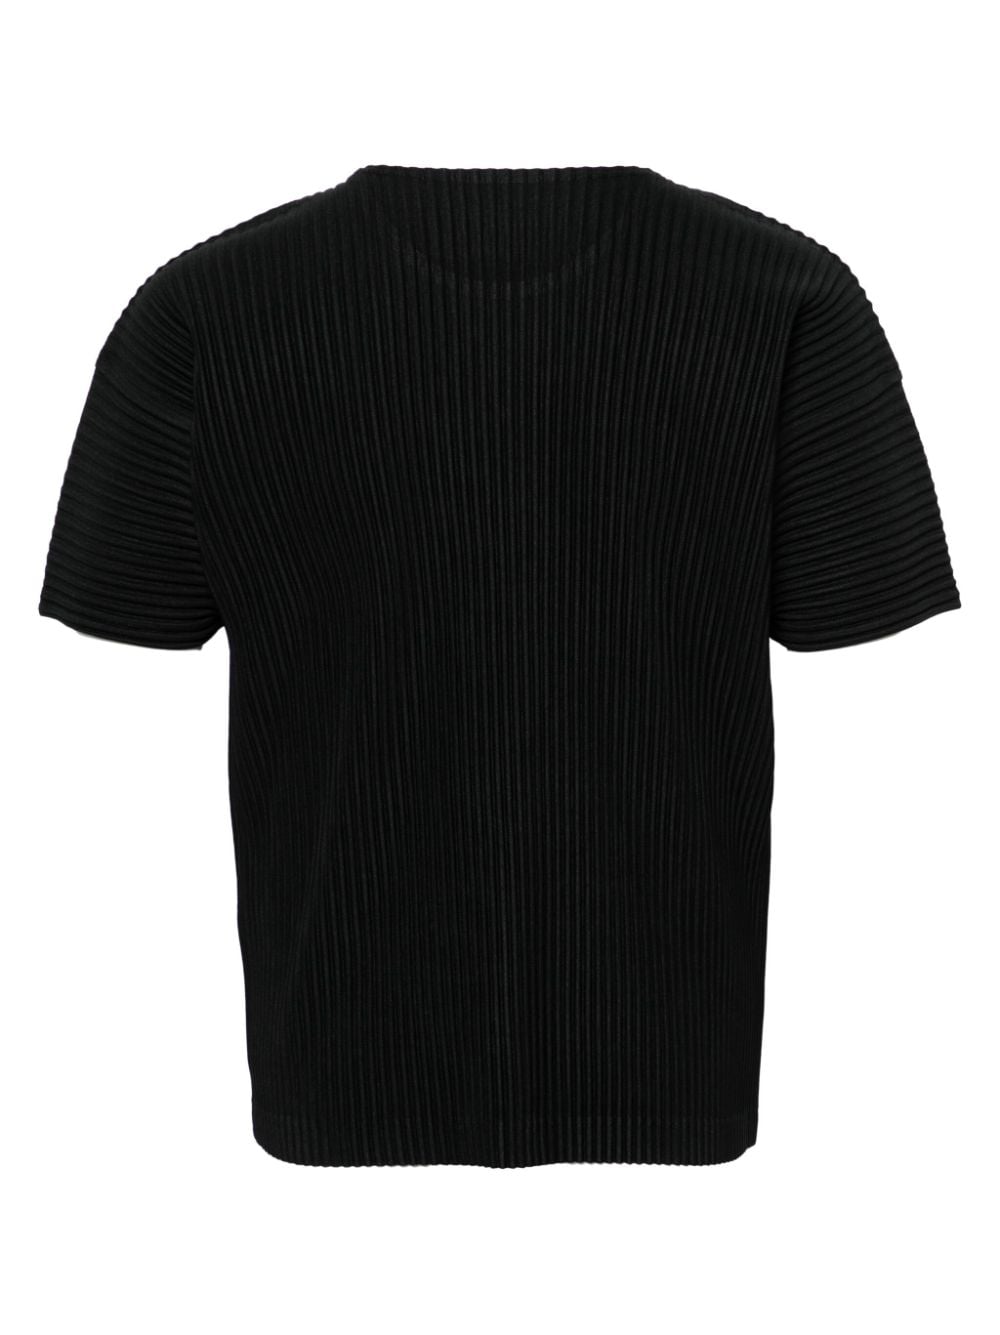 Homme Plissé Issey Miyake T-shirt met plissé-effect Zwart